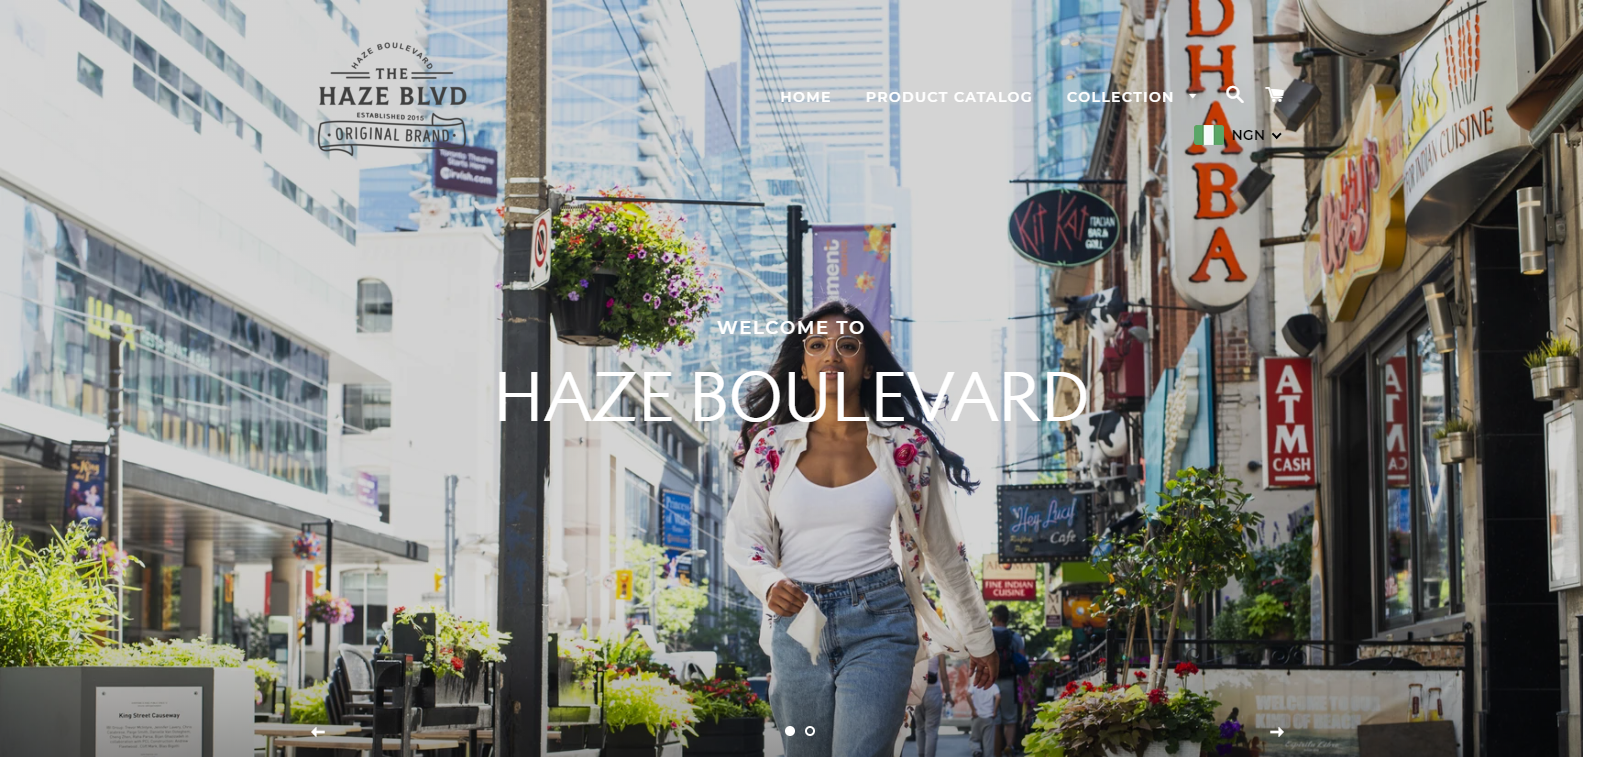 hazeboulevard Homepage Image